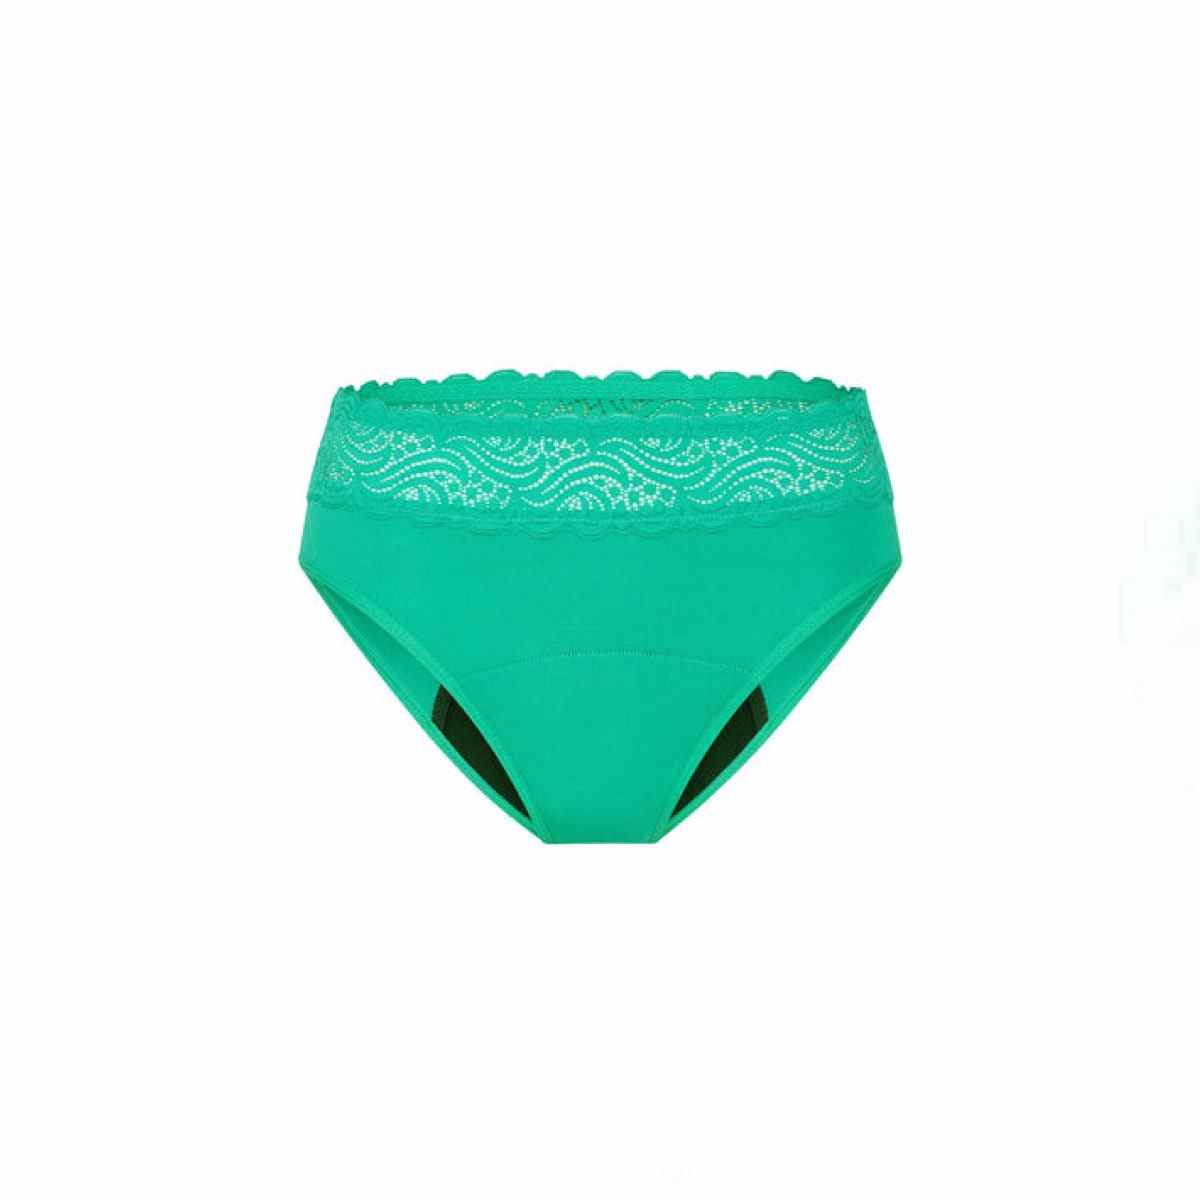 Grüne Modibodi Sensual Hi-Waist Bikinihose auf weißem Hintergrund